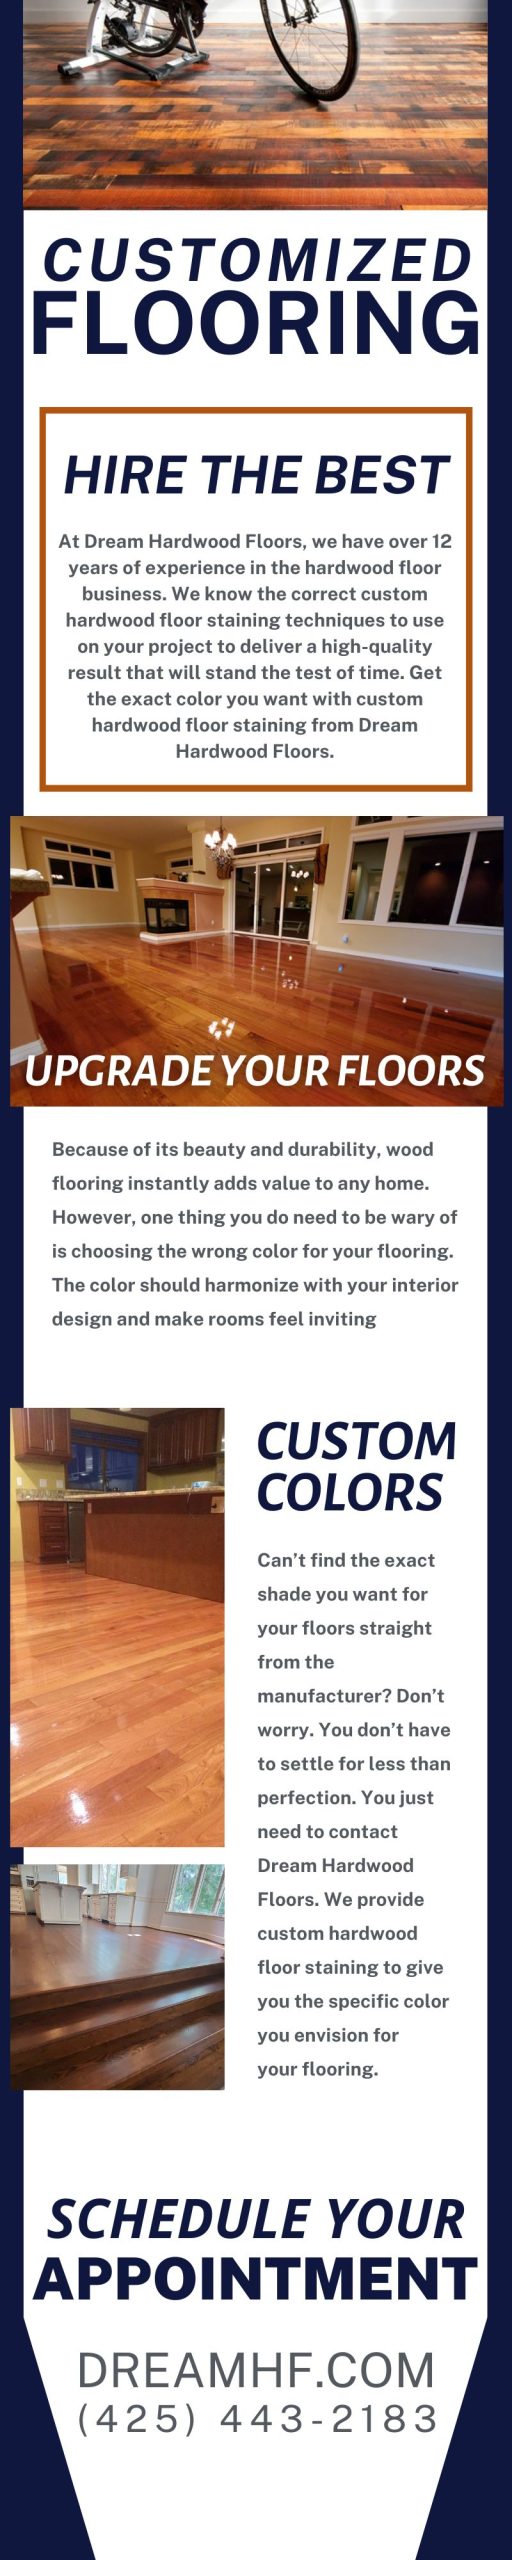 Customized Flooring! 1